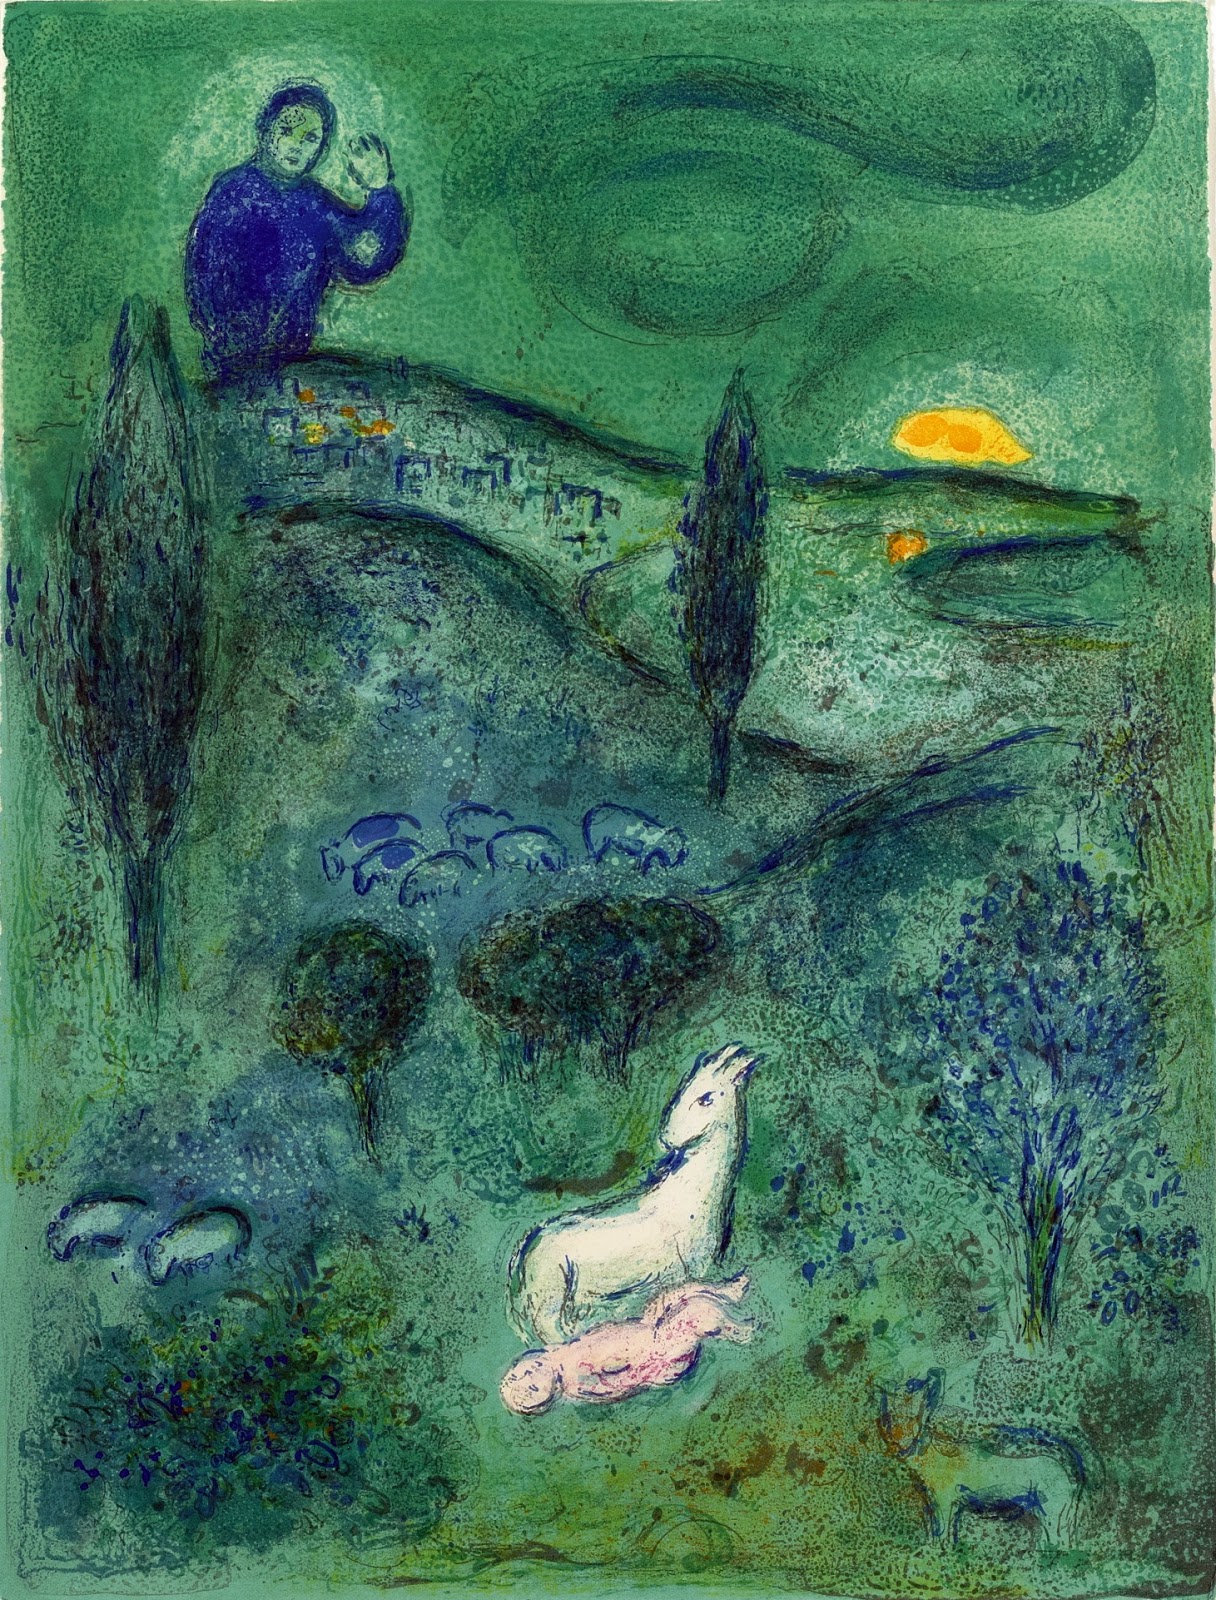 Marc+Chagall-1887-1985 (230).jpg